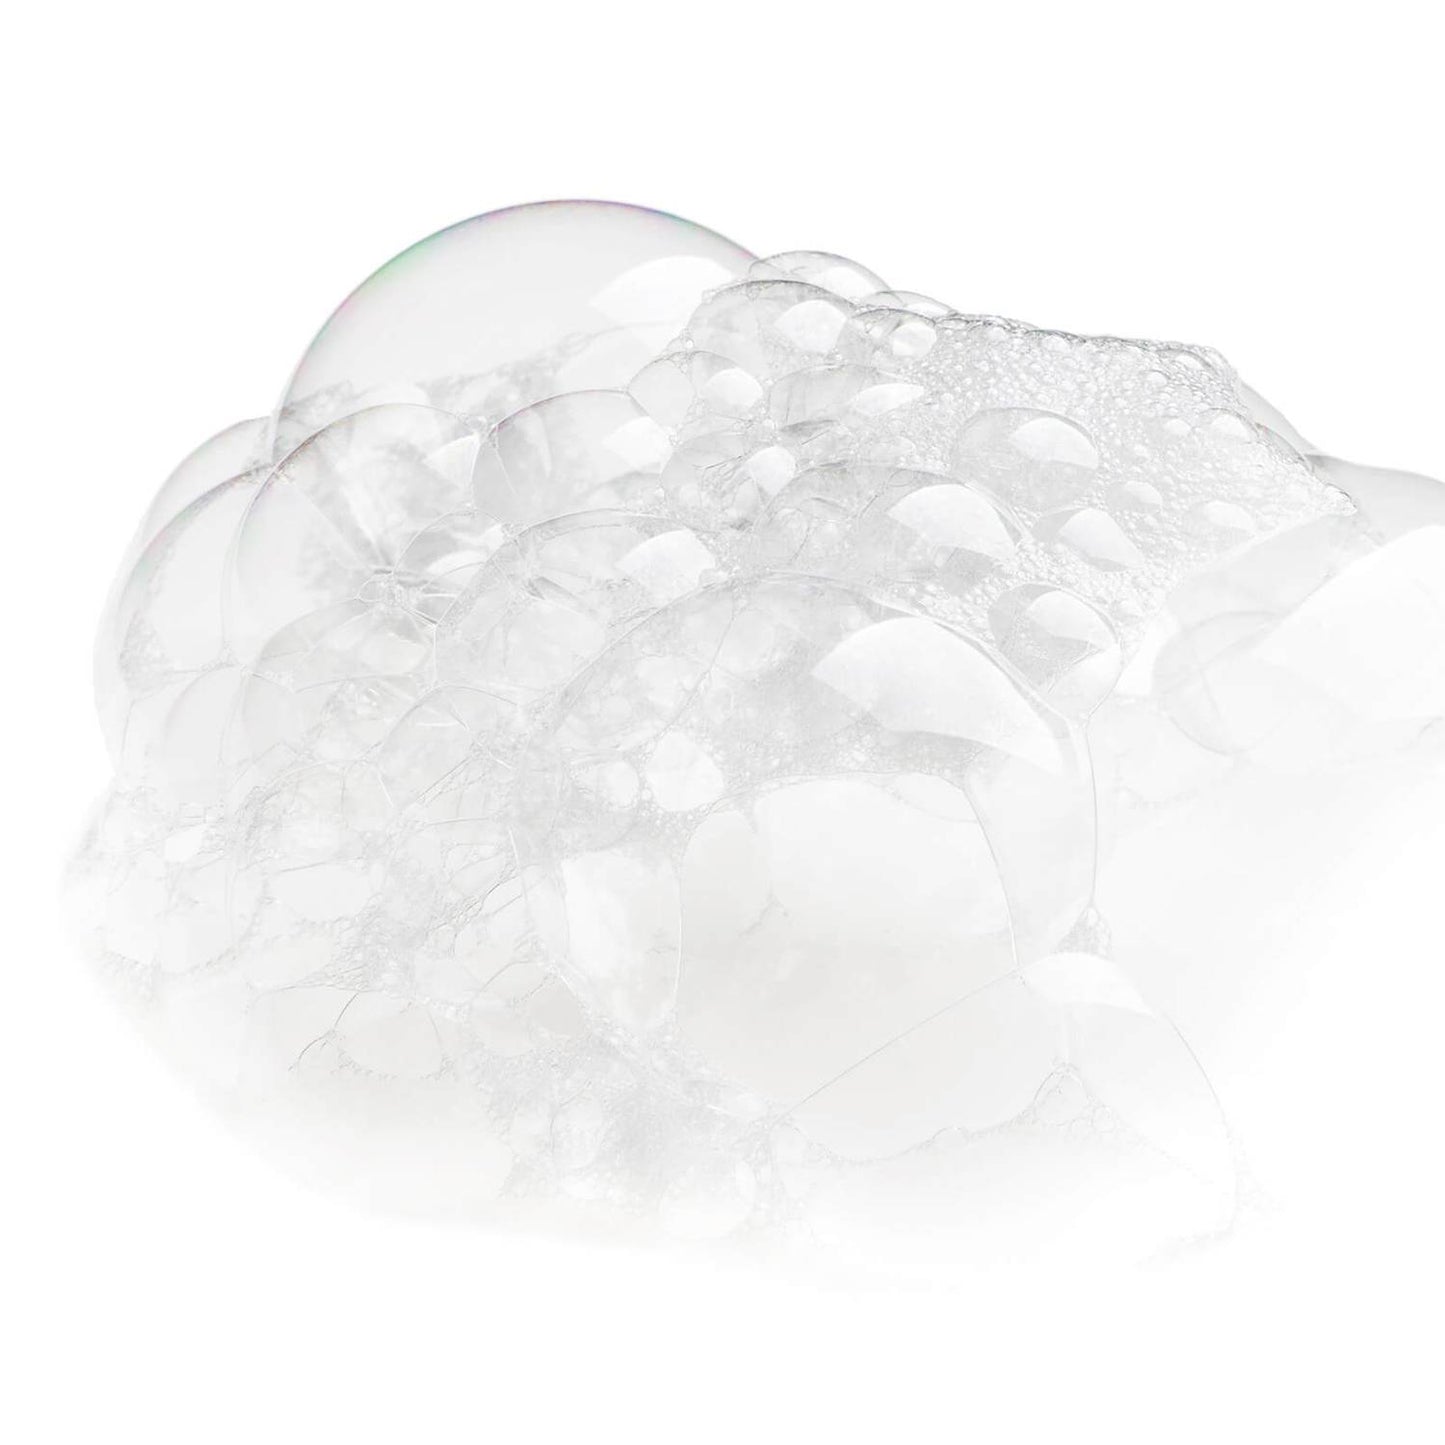 Korres Santorini Grape Renewing Body Cleanser is a gel-to-foam formula featuring 88.3% natural origin ingredients.